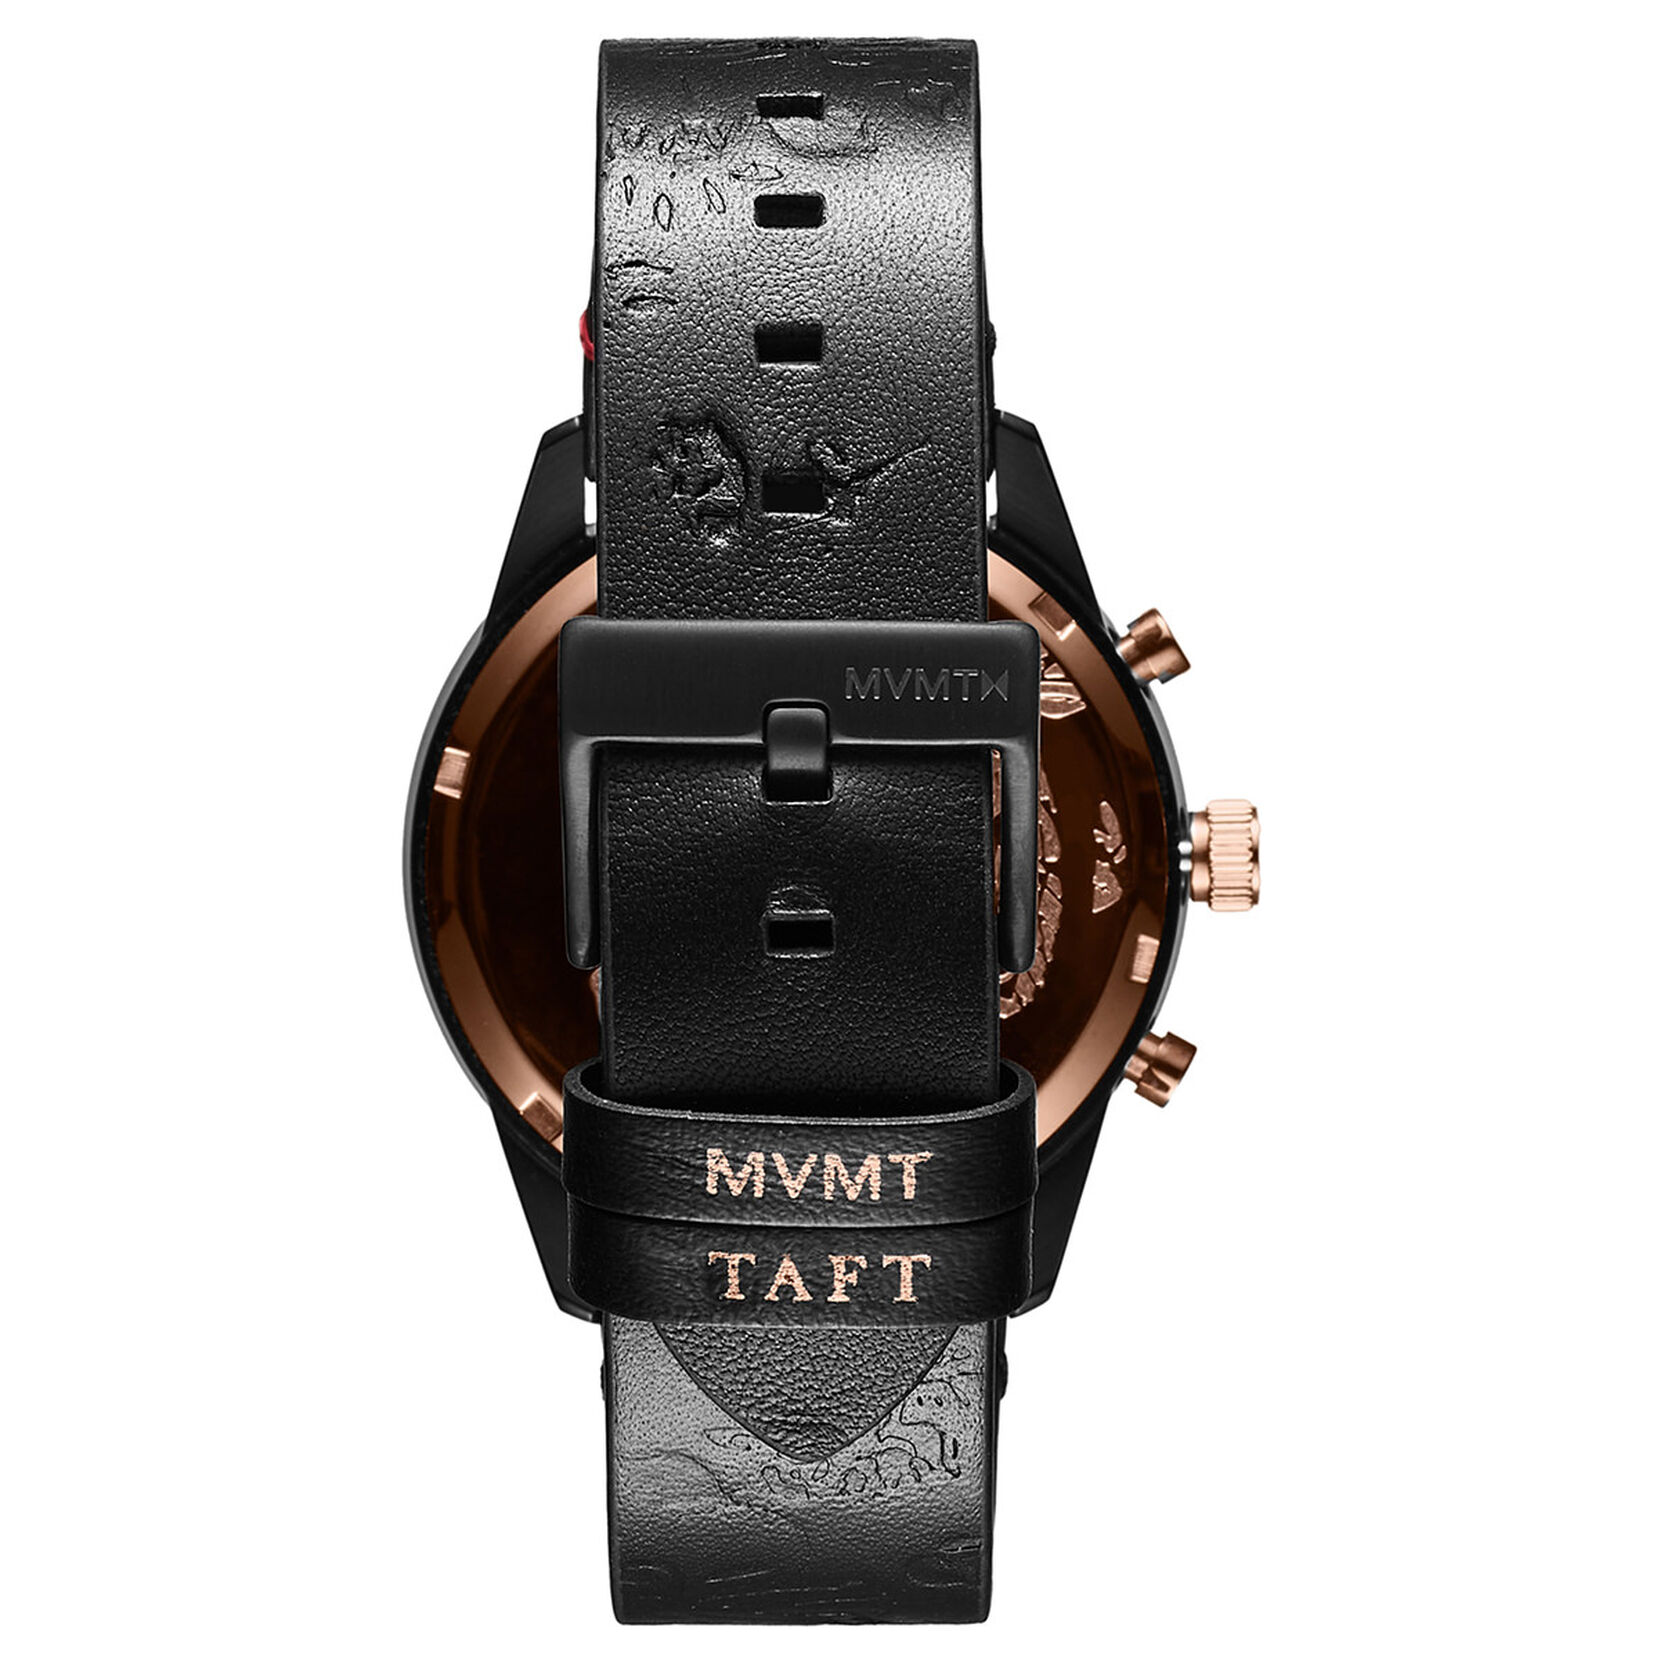 The Taft x MVMT Powerlane Watch